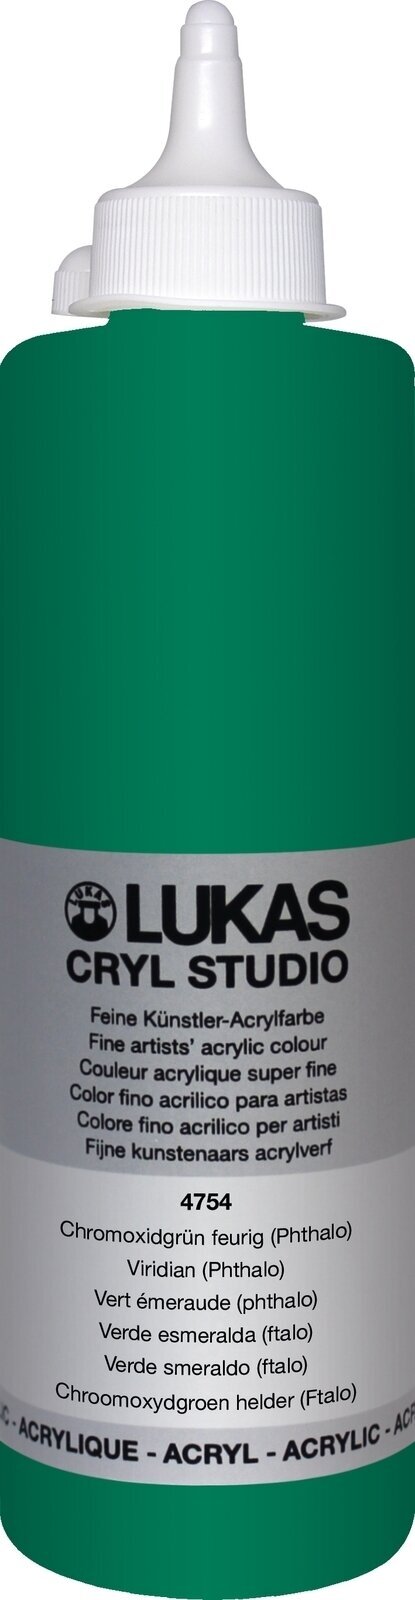 Colore acrilico Lukas Cryl Studio Acrylic Paint Plastic Bottle Colori acrilici Viridian (Phthalo) 500 ml 1 pz